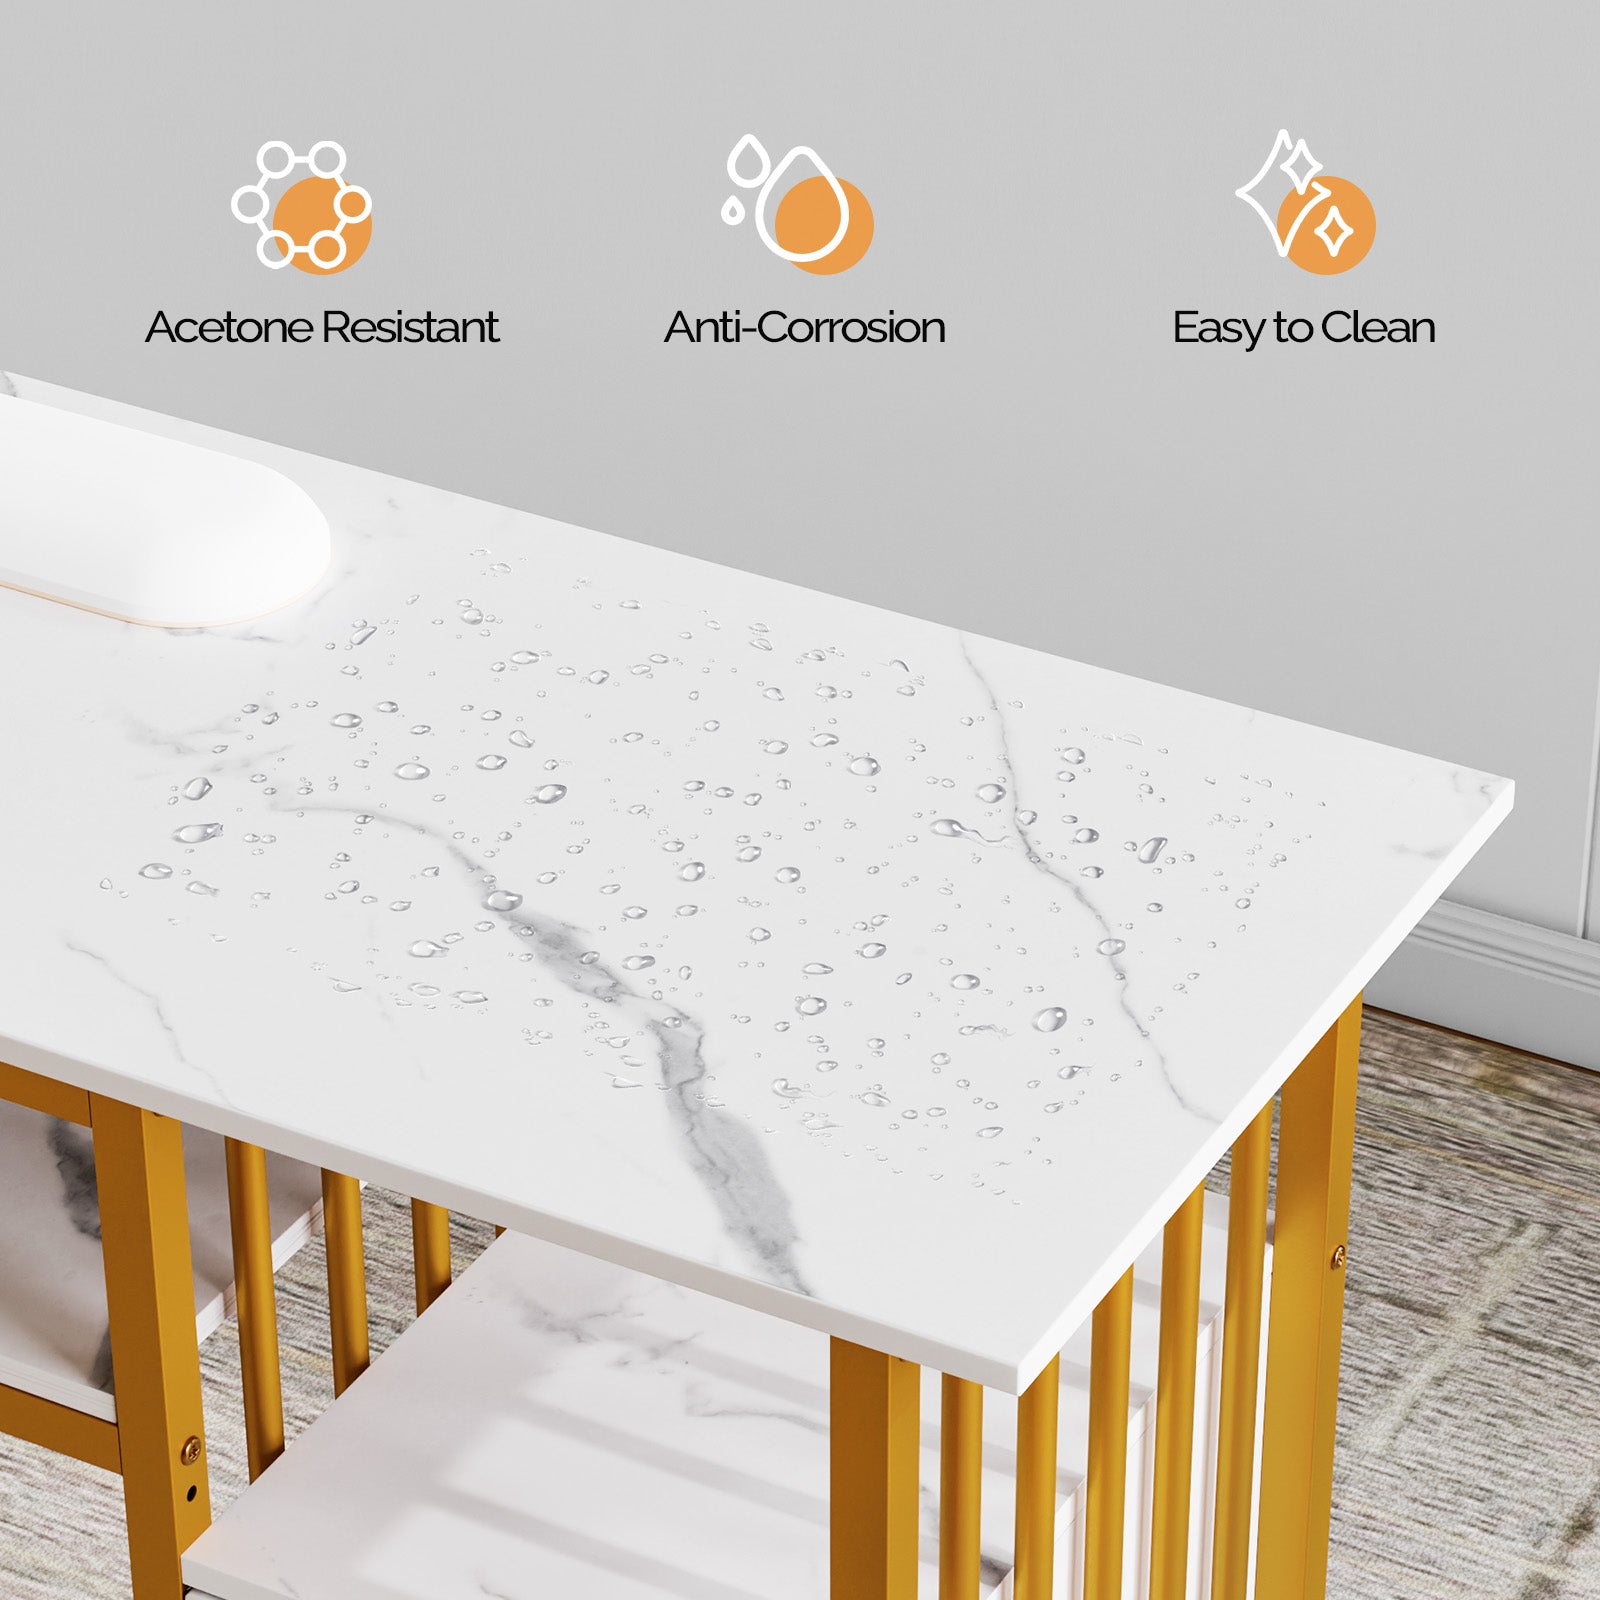 OmySalon Marbling Texture Nail Manicure Table w/Wrist Rest & 2-Tier Desktop 3 Drawers